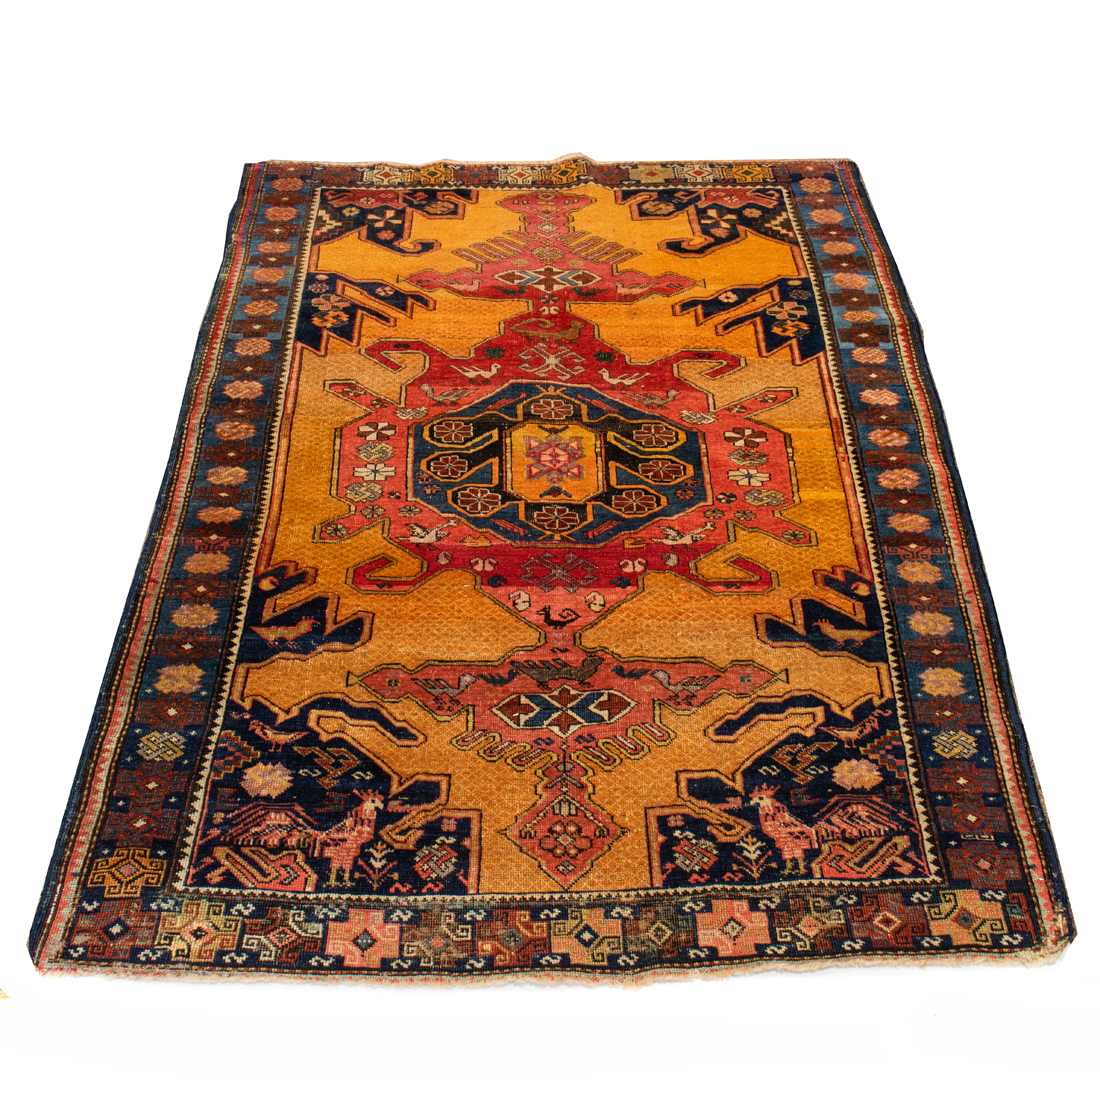 A CAUCASIAN CARPET A Caucasian carpet,